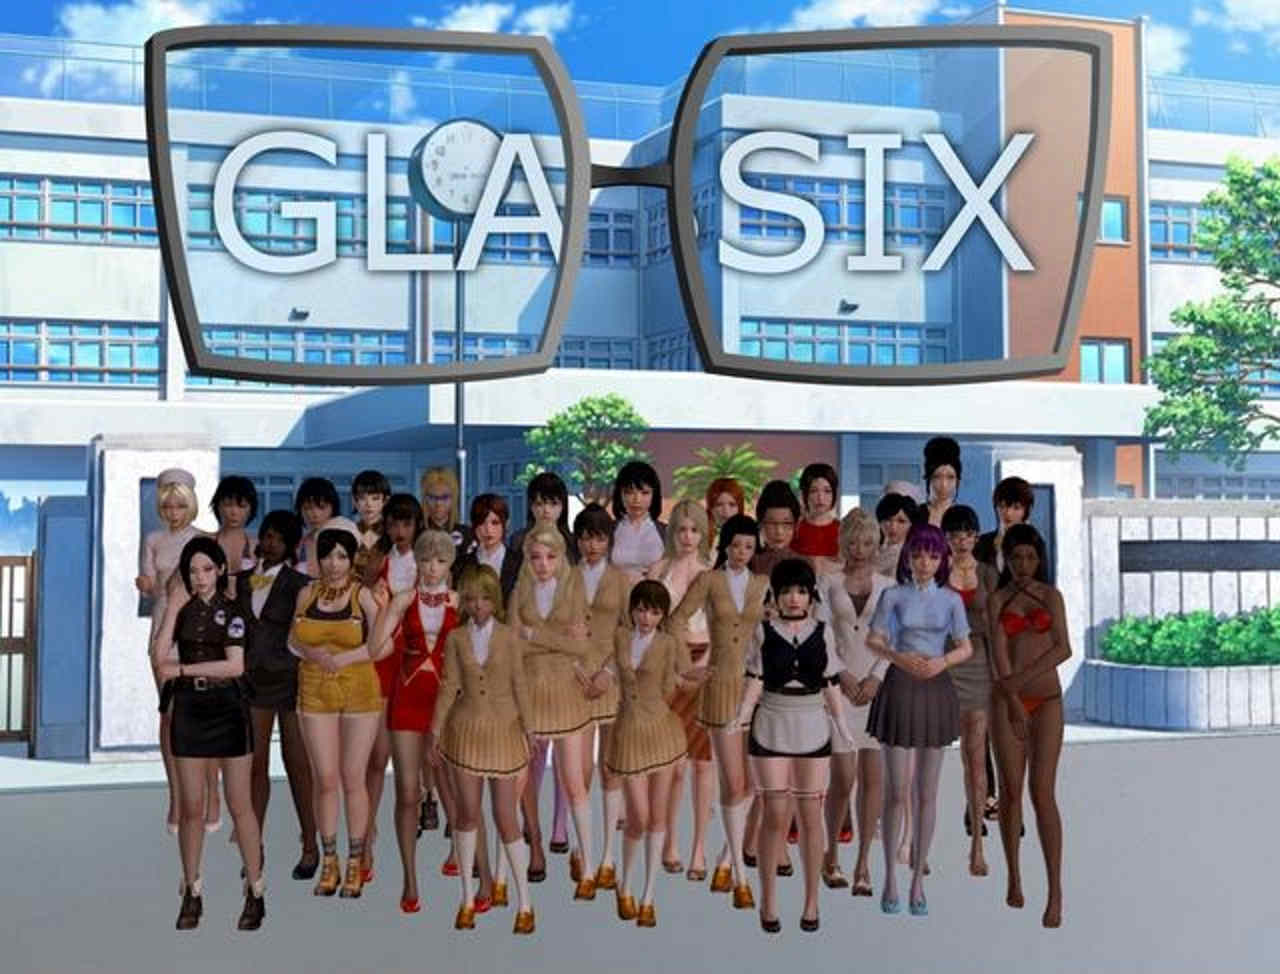 Glassix porn game